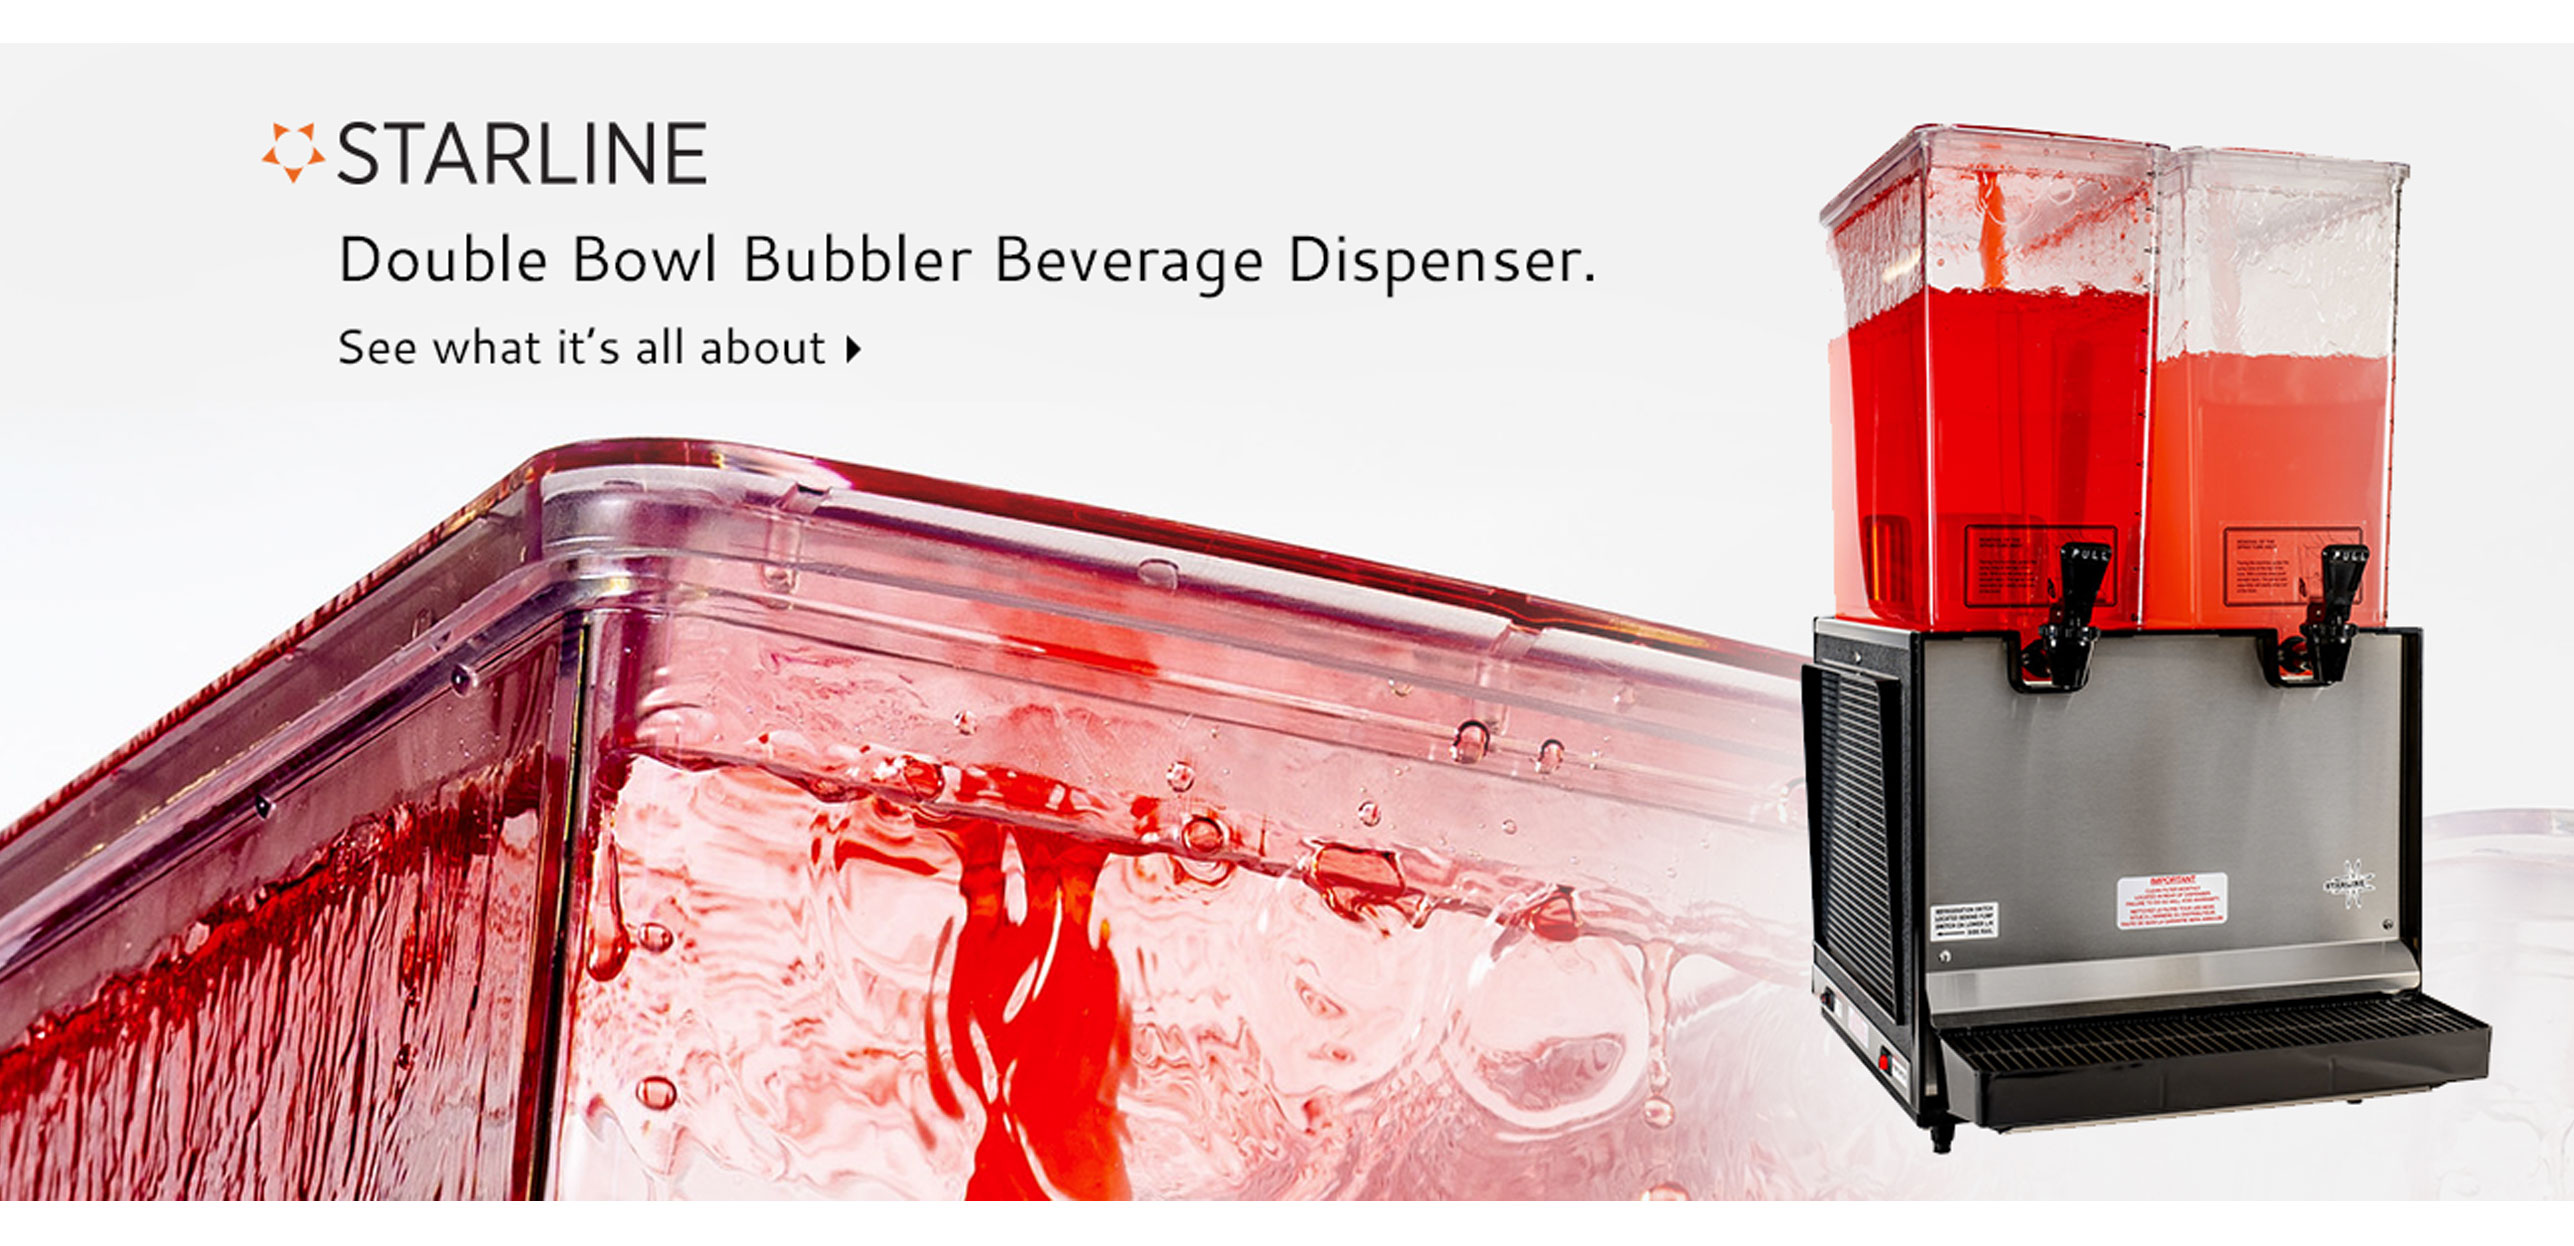 Starline S2
Double Bowl Bubbler Beverage Dispenser